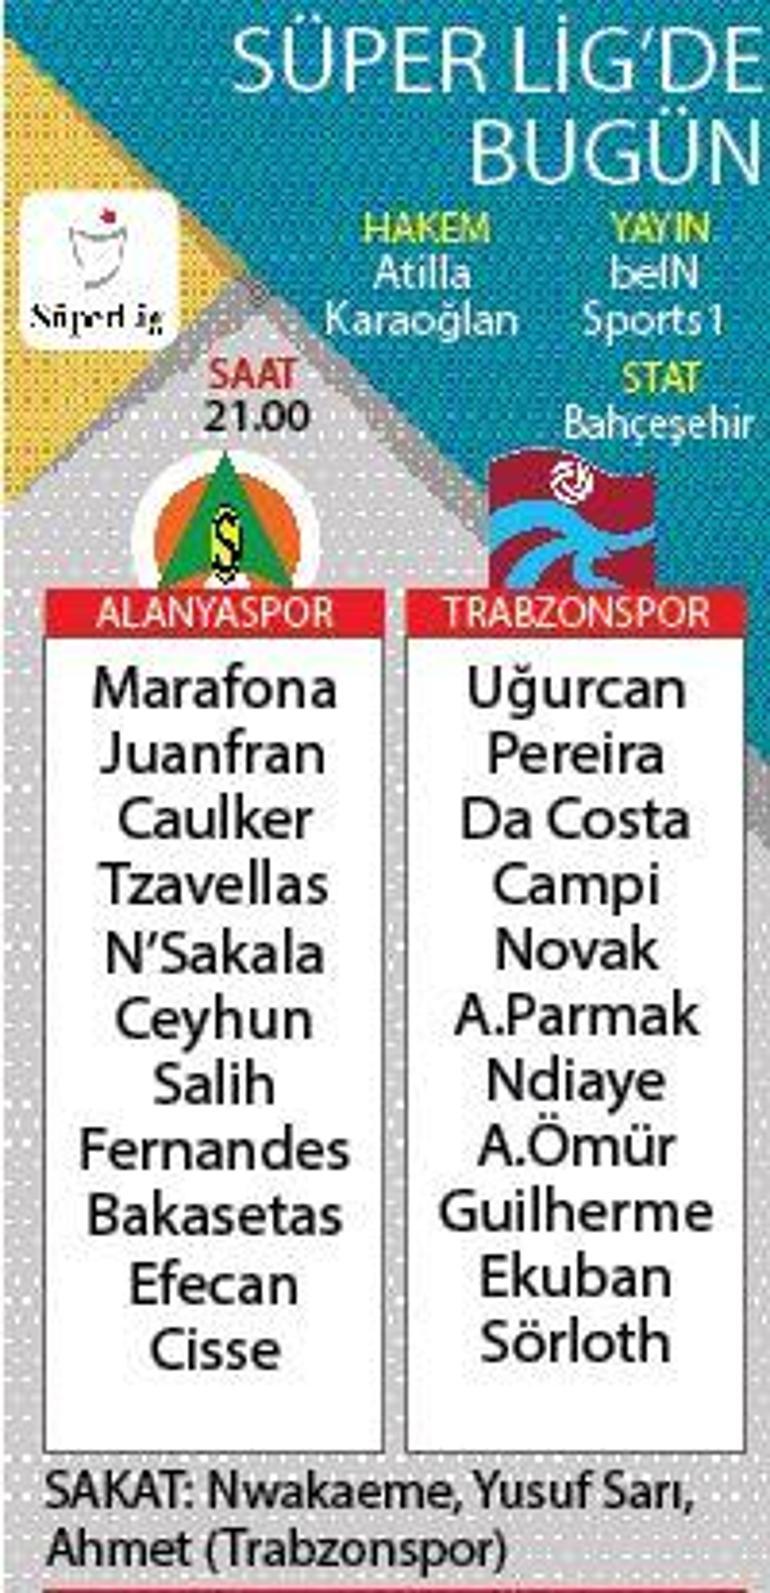 Alanya’da erken final Alanyaspor - Trabzonspor